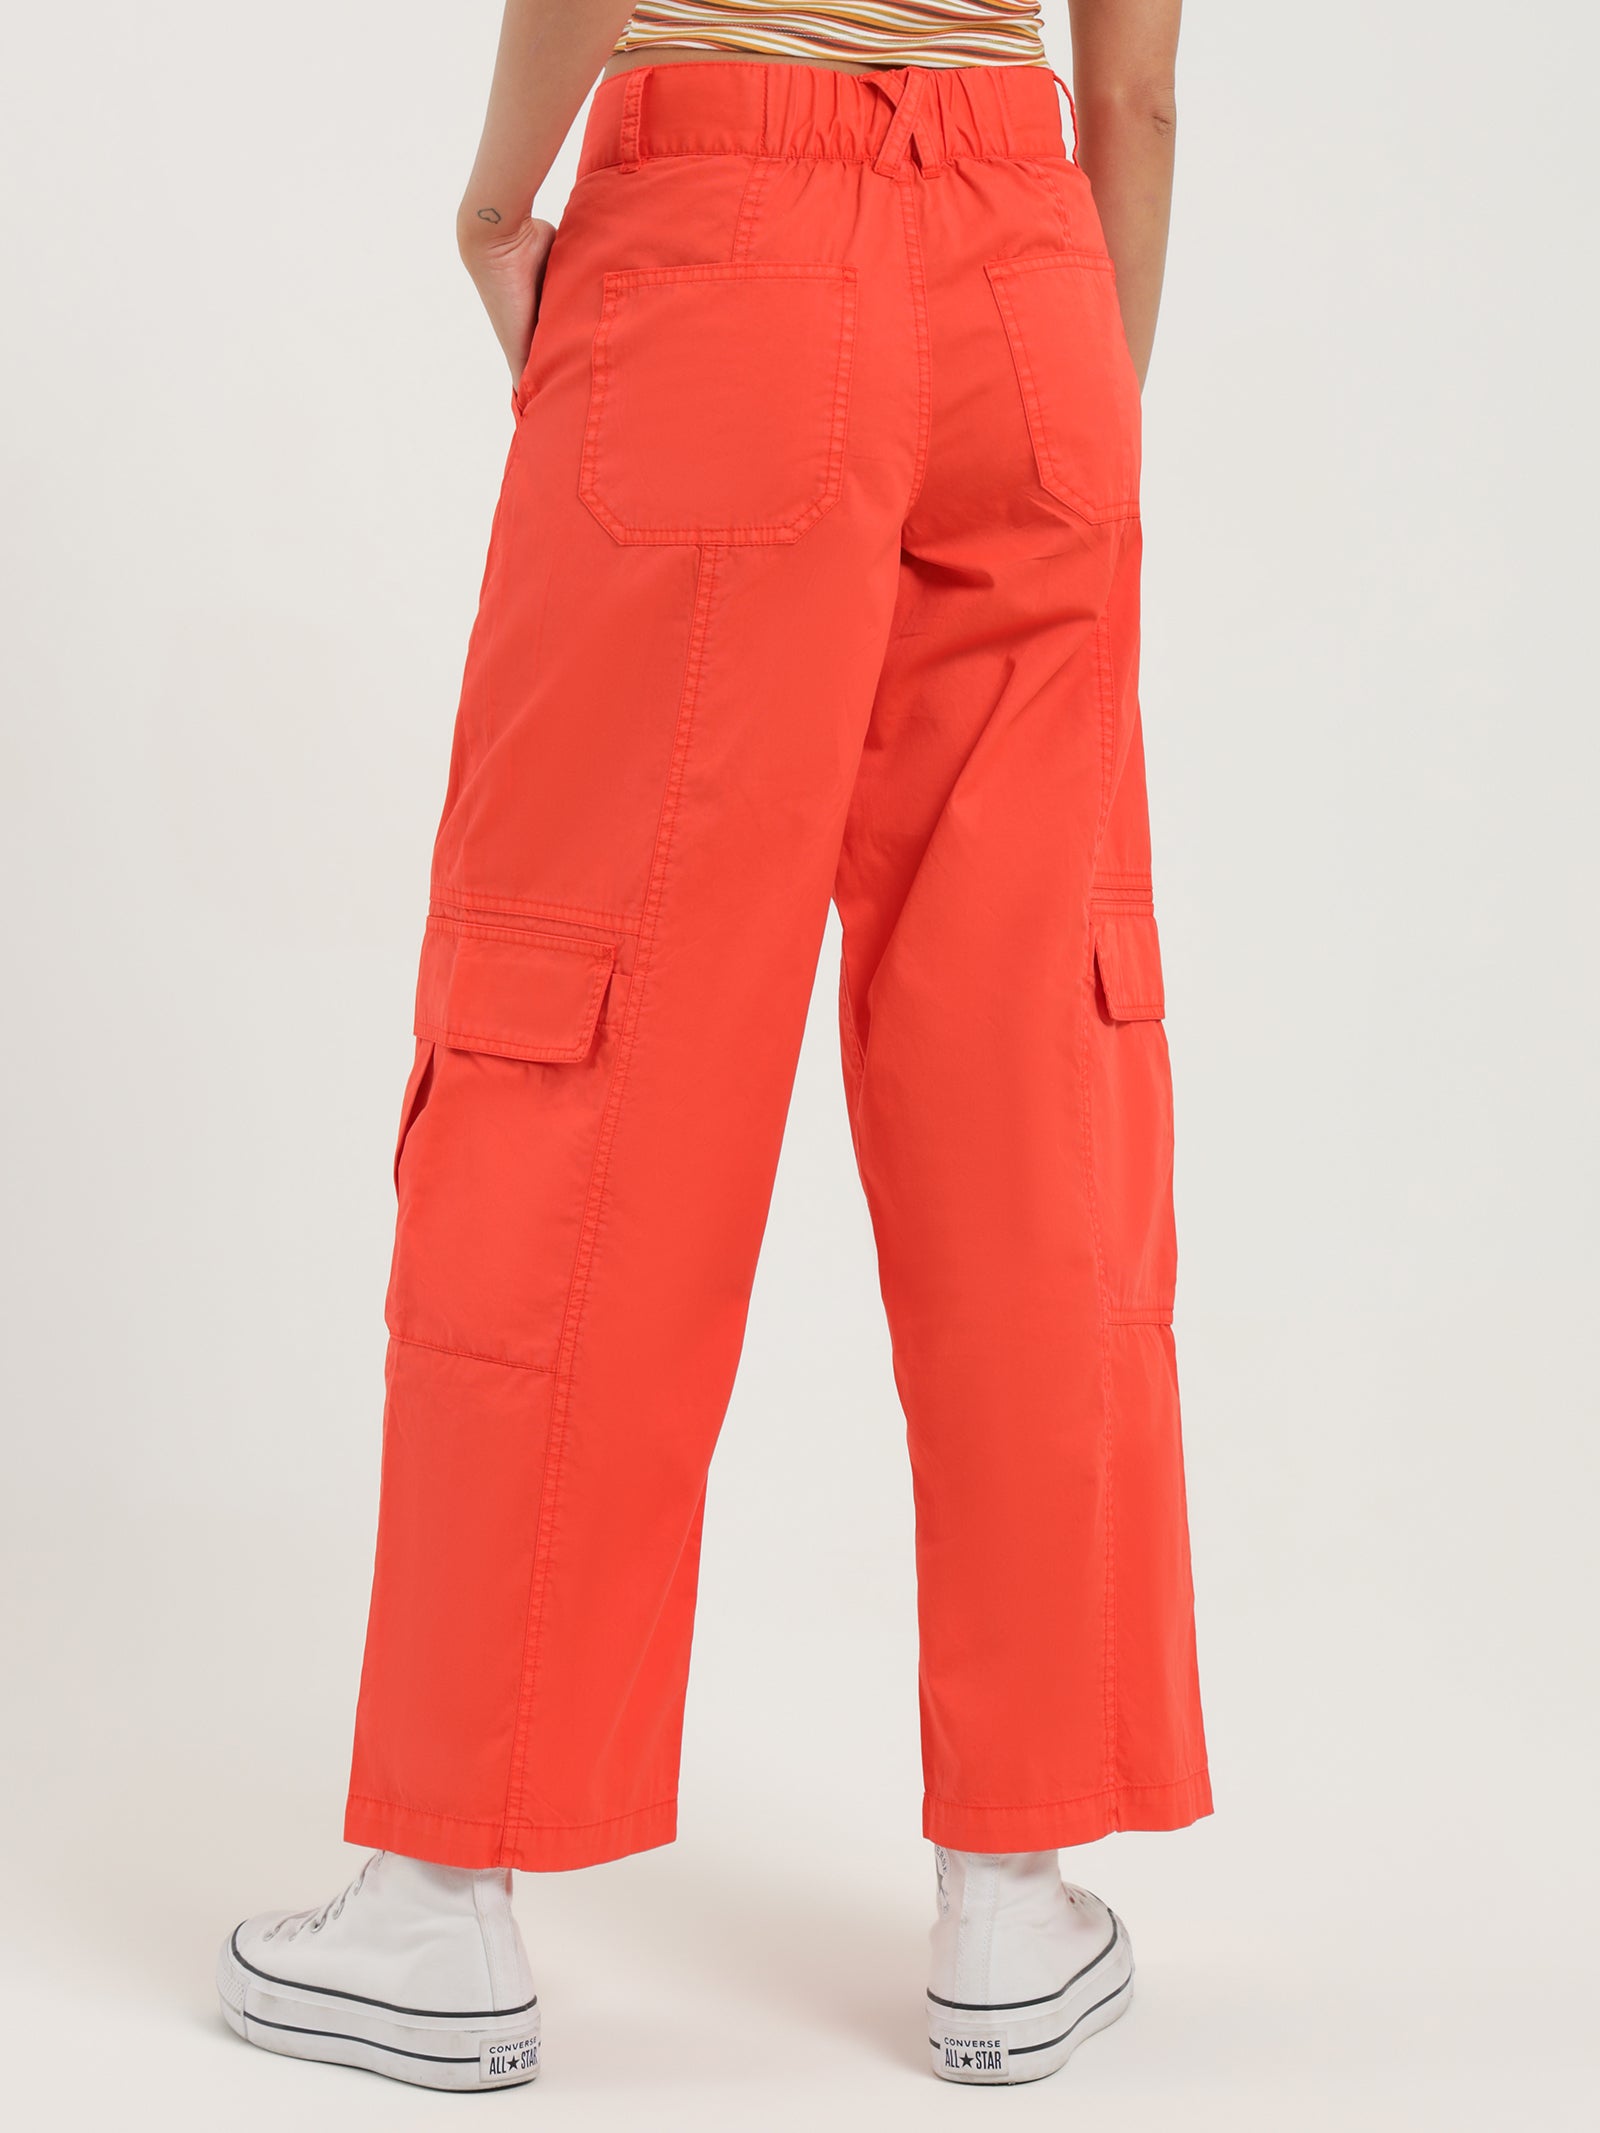 Made For Walking Cargo Pants in Blood Orange